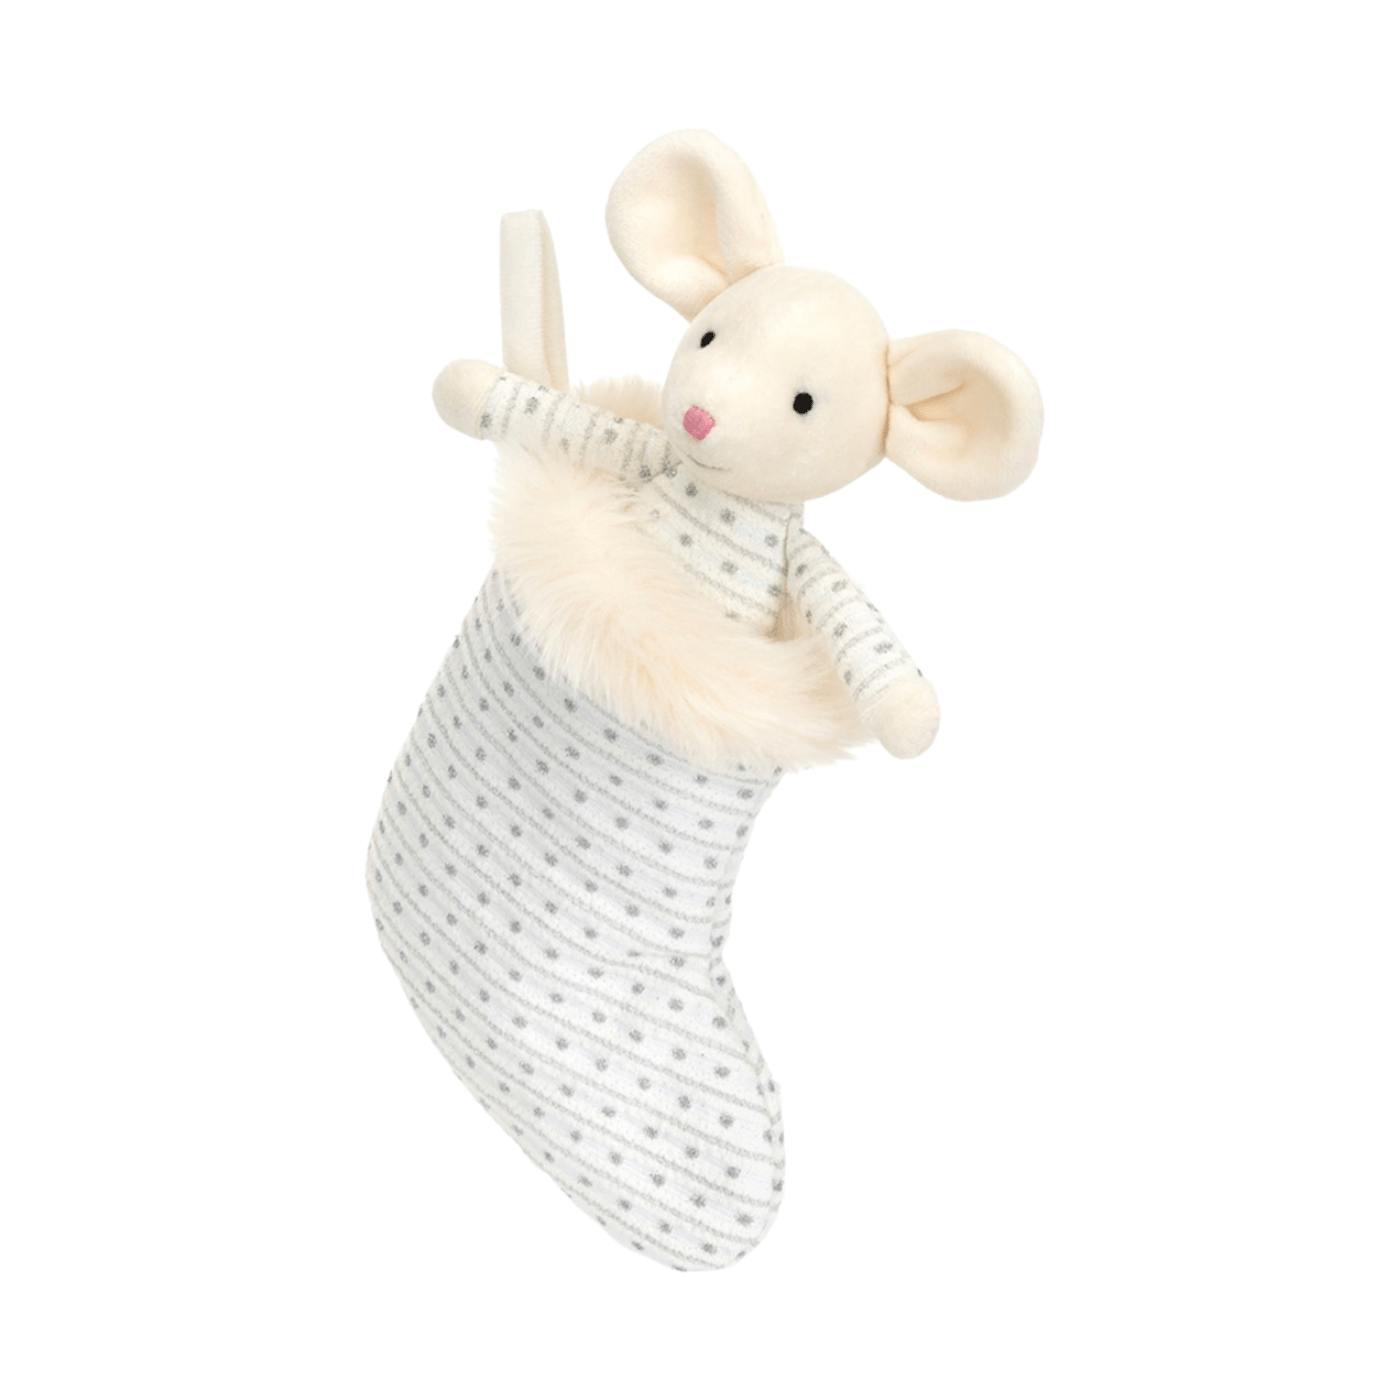 Jellycat London Shimmer Stocking Mouse/Maus ca. H20xW9cm & Jolly Santa/Weihnachtsmann ca. H42xW30cm🎄🎁 - Bitangel RENOVATE & FURNISH HOMES GmbH